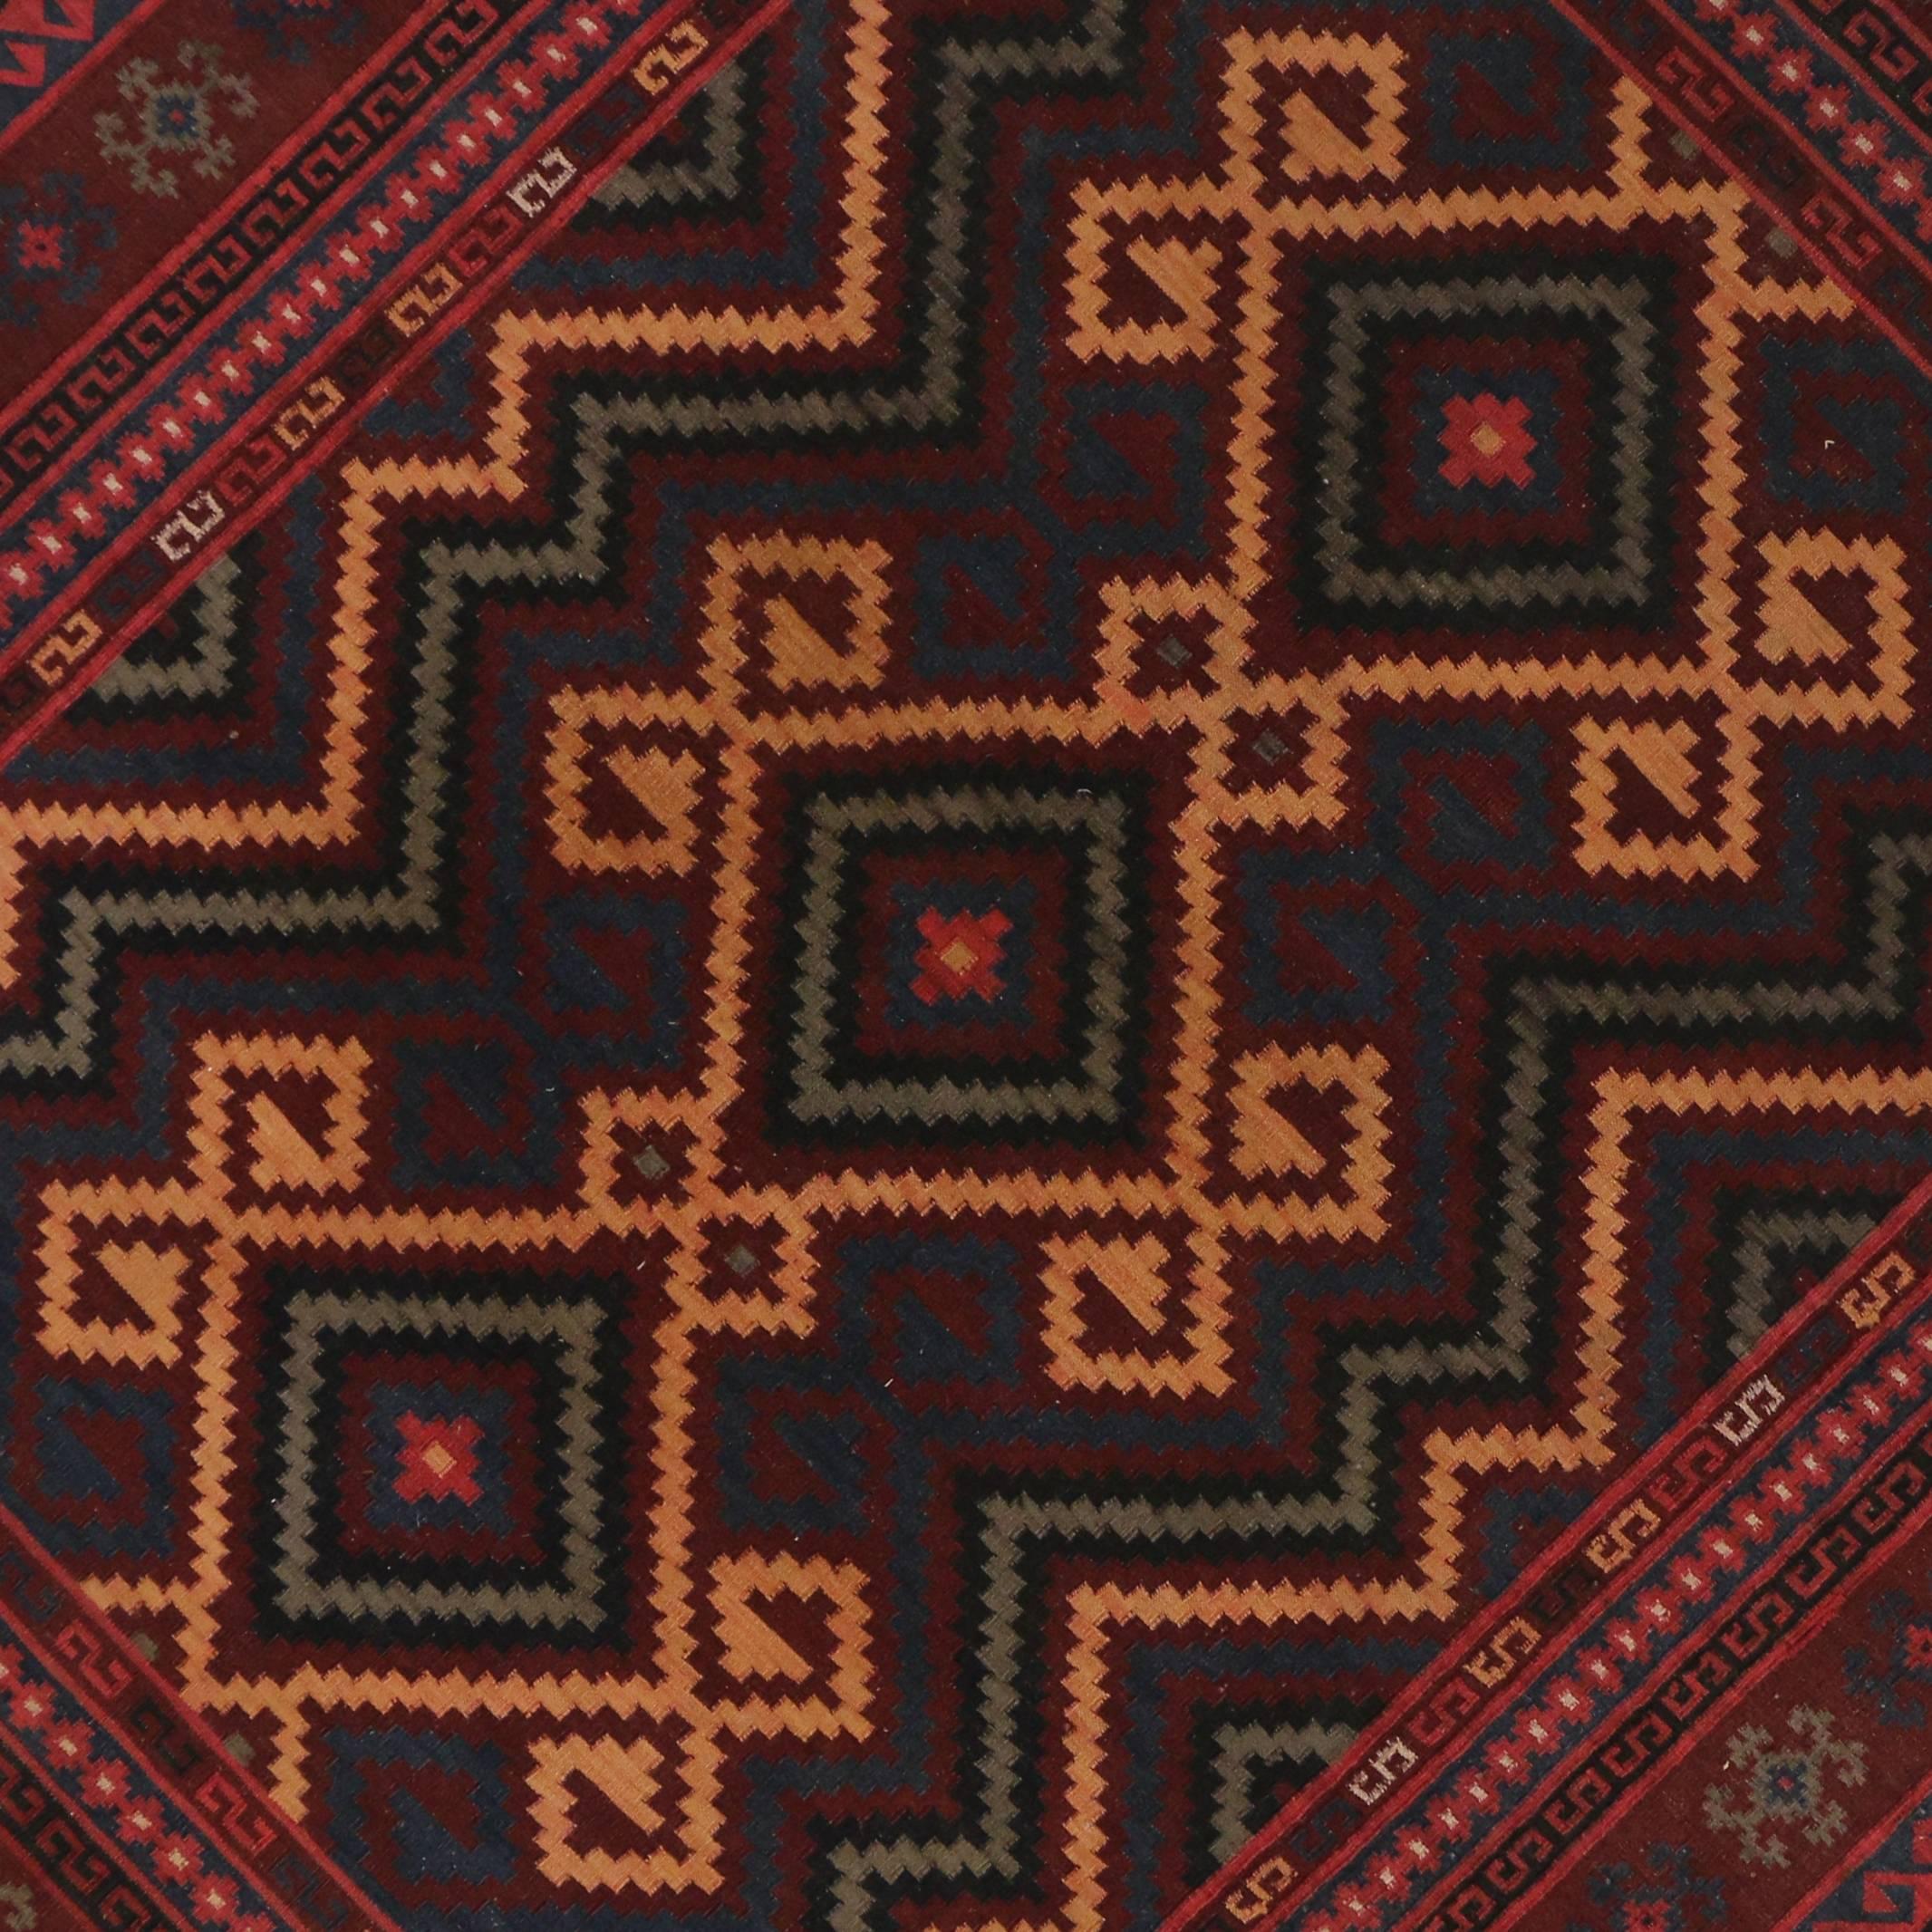 Hand-Woven Boho Chic Vintage Turkish Flatweave Kilim Rug with Modern Tribal Style